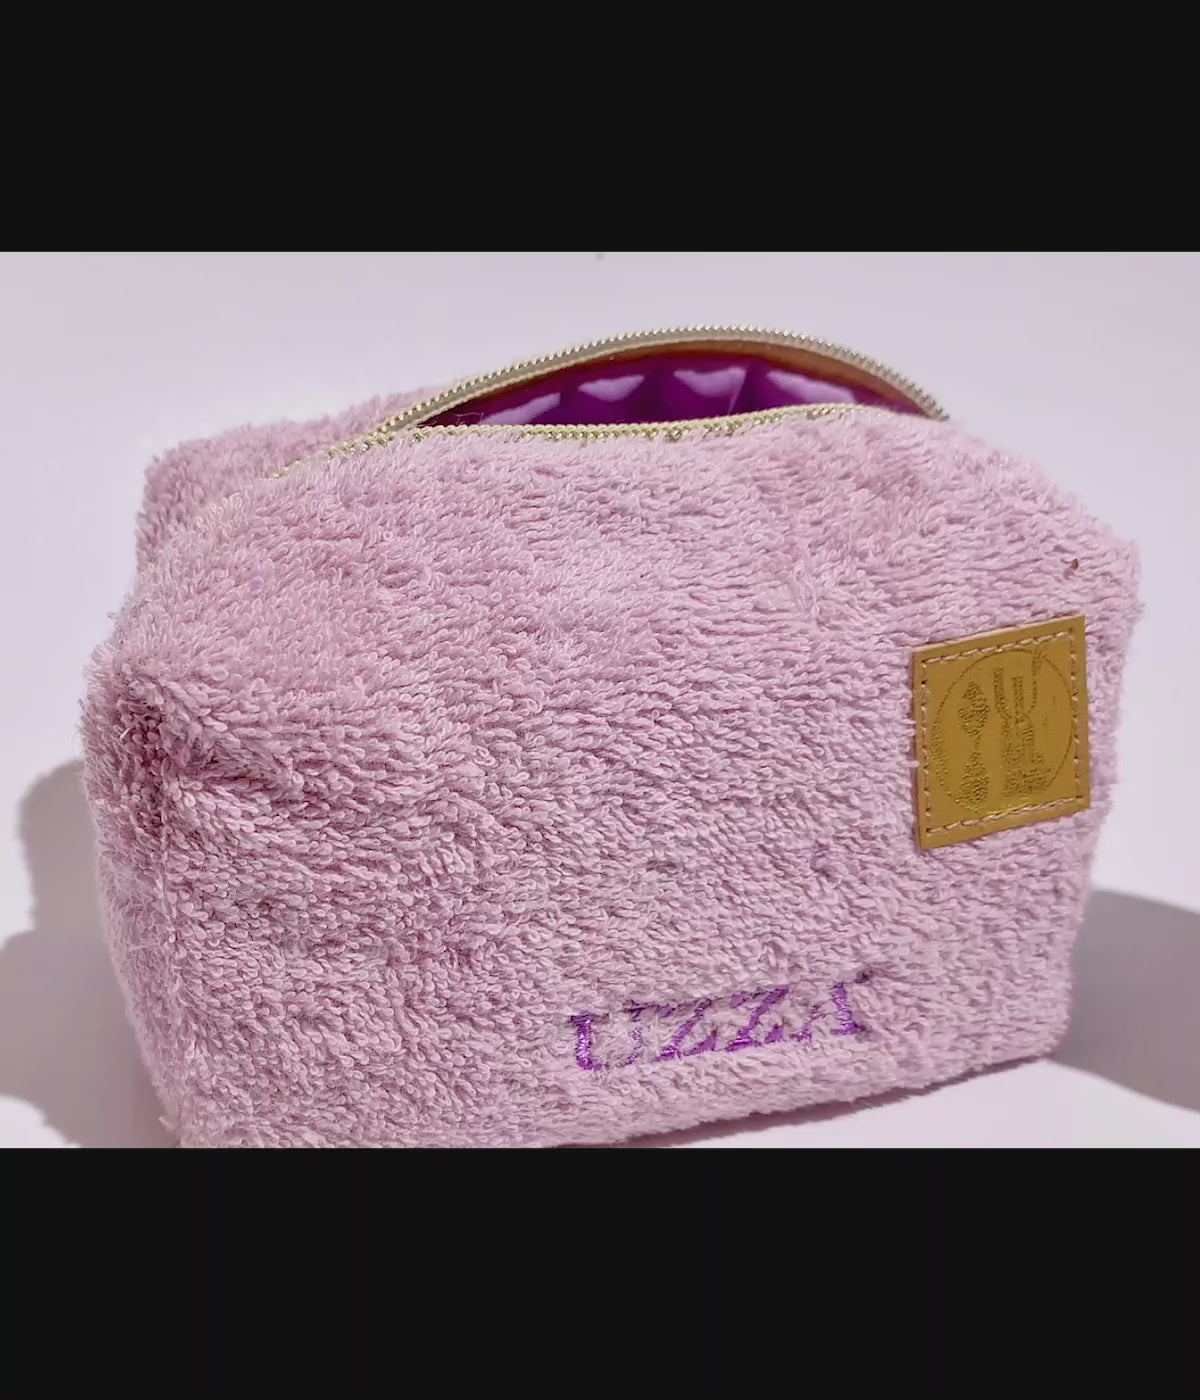 Terry Cloth Makeup Bag -Multiple Colors